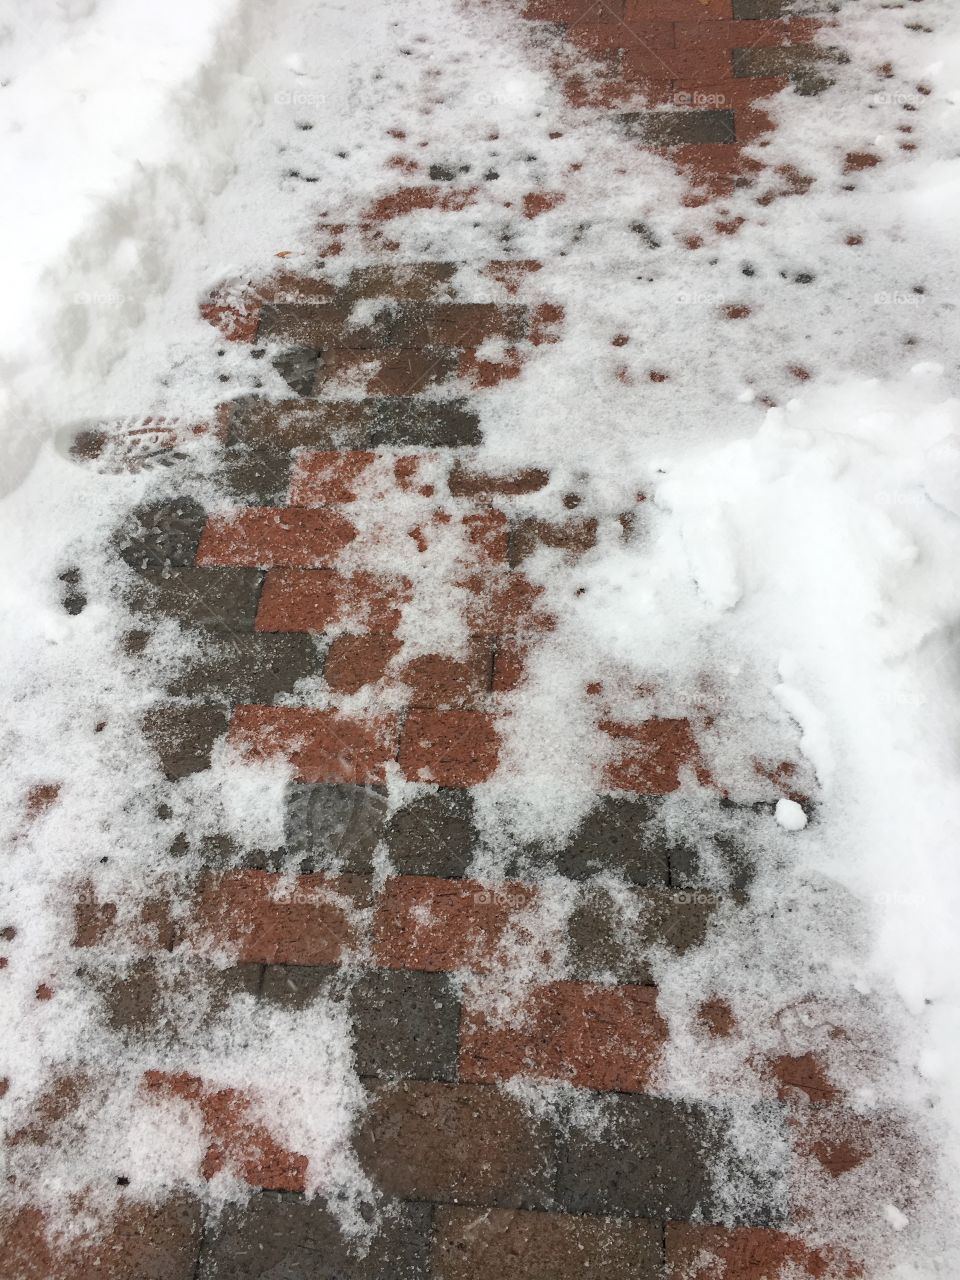 Tread Lightly Ice Snowy Brick Pathway With Footprints